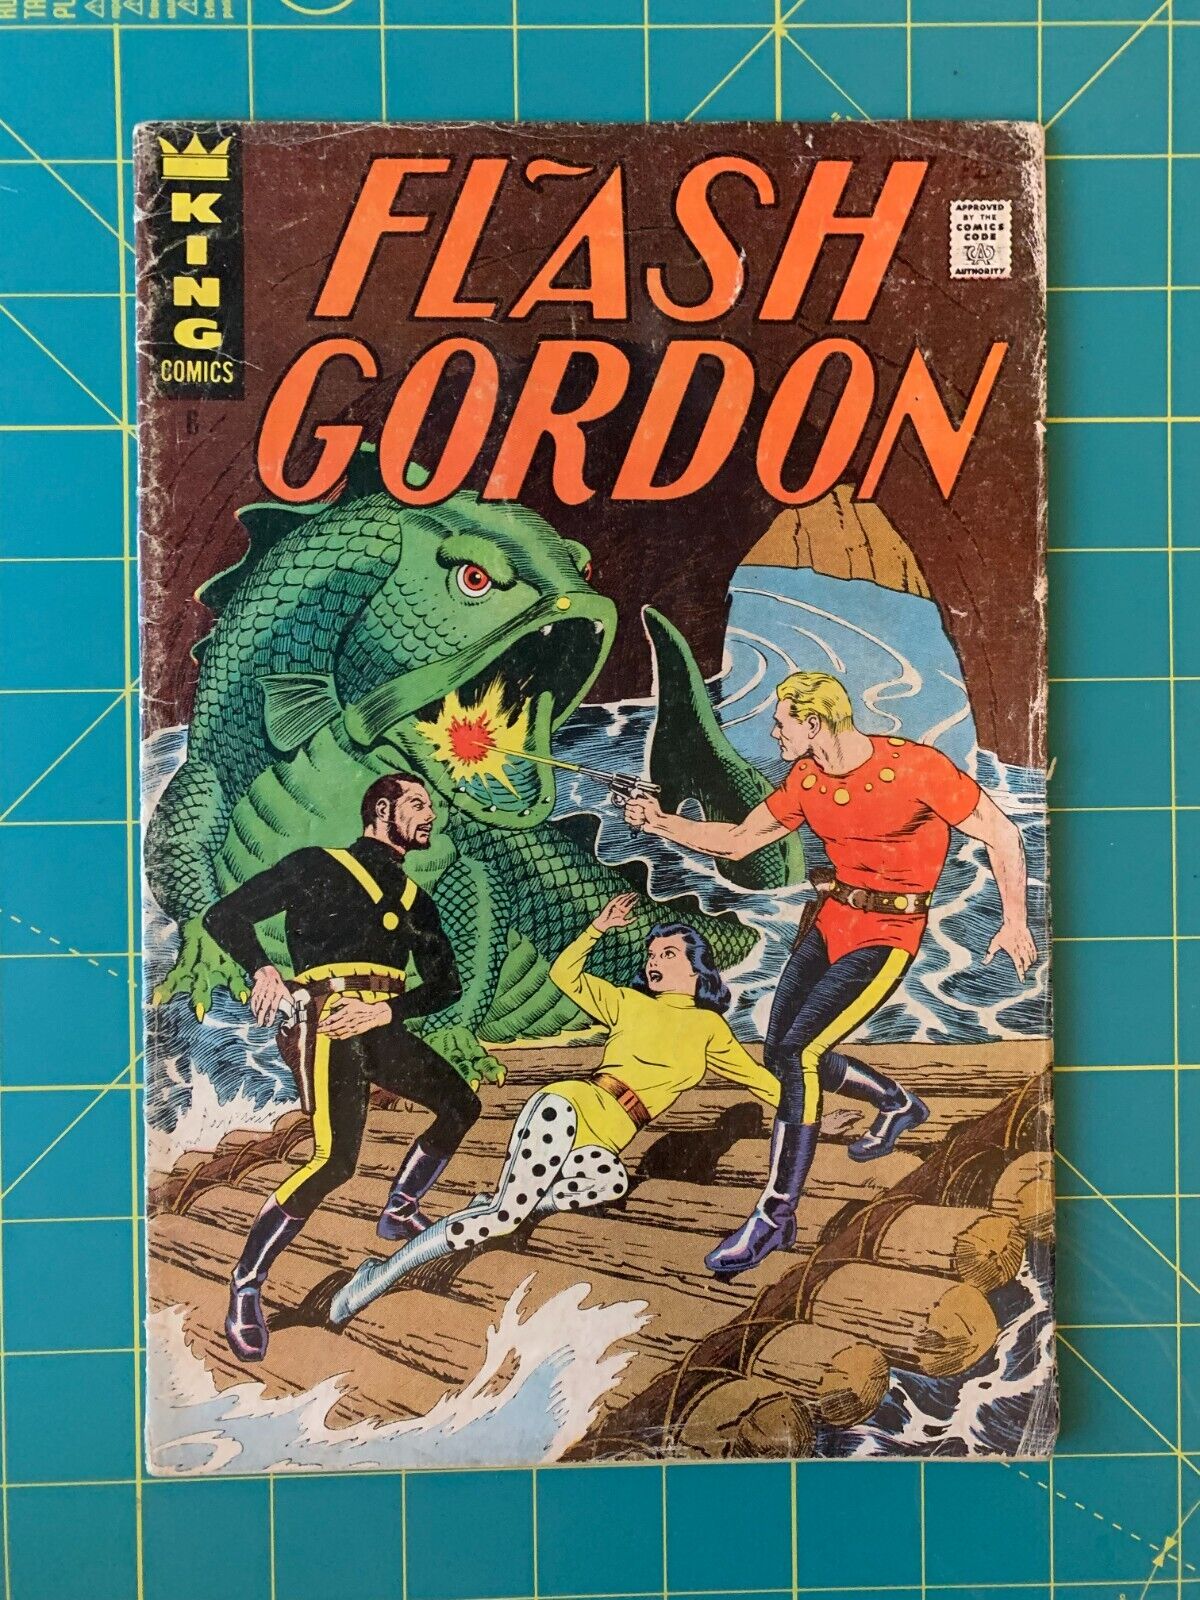 Flash Gordon #6 - Jun 1967 - King Features Syndicate - (8505)